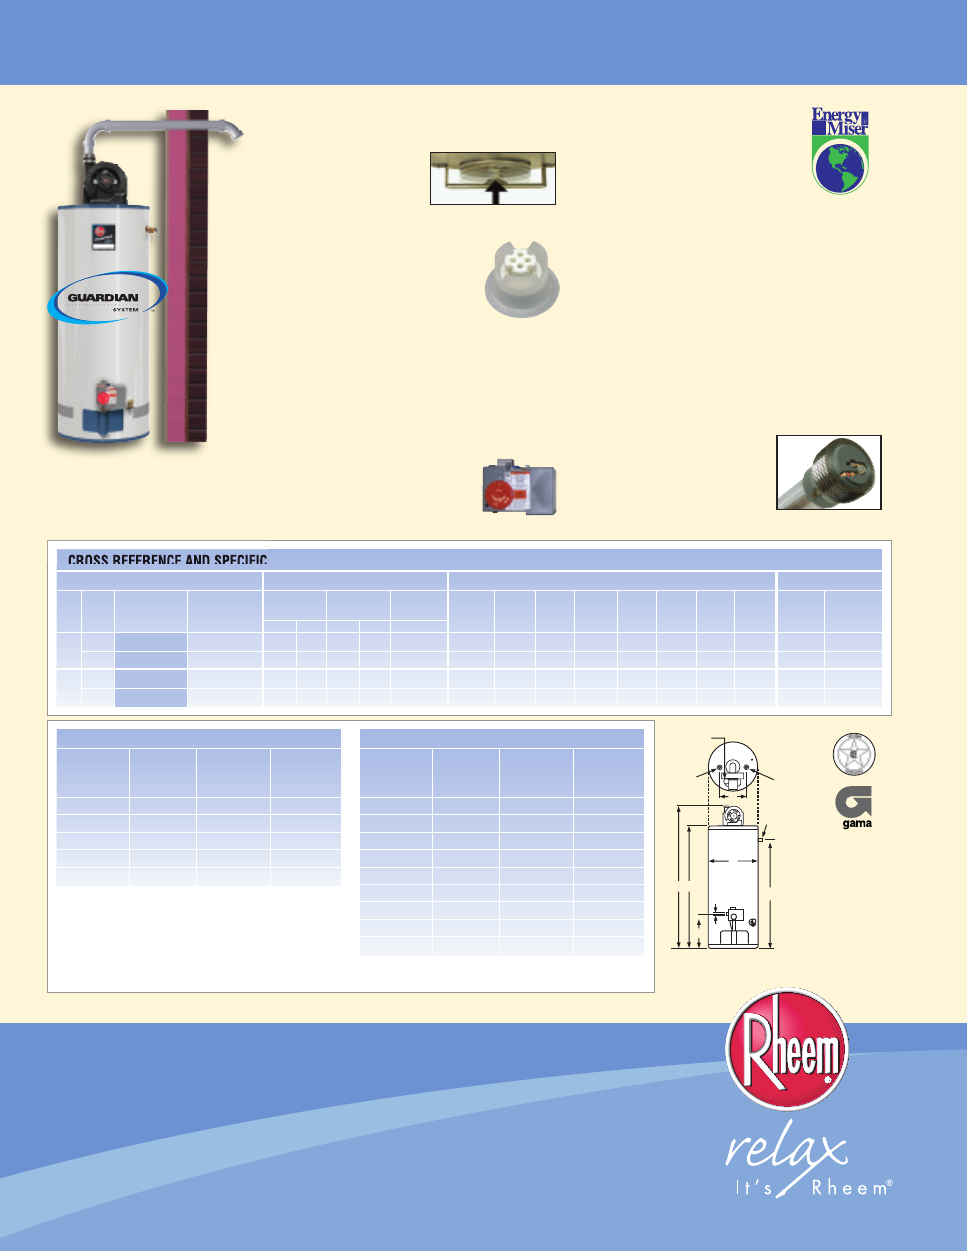 Rheem water heater service manual